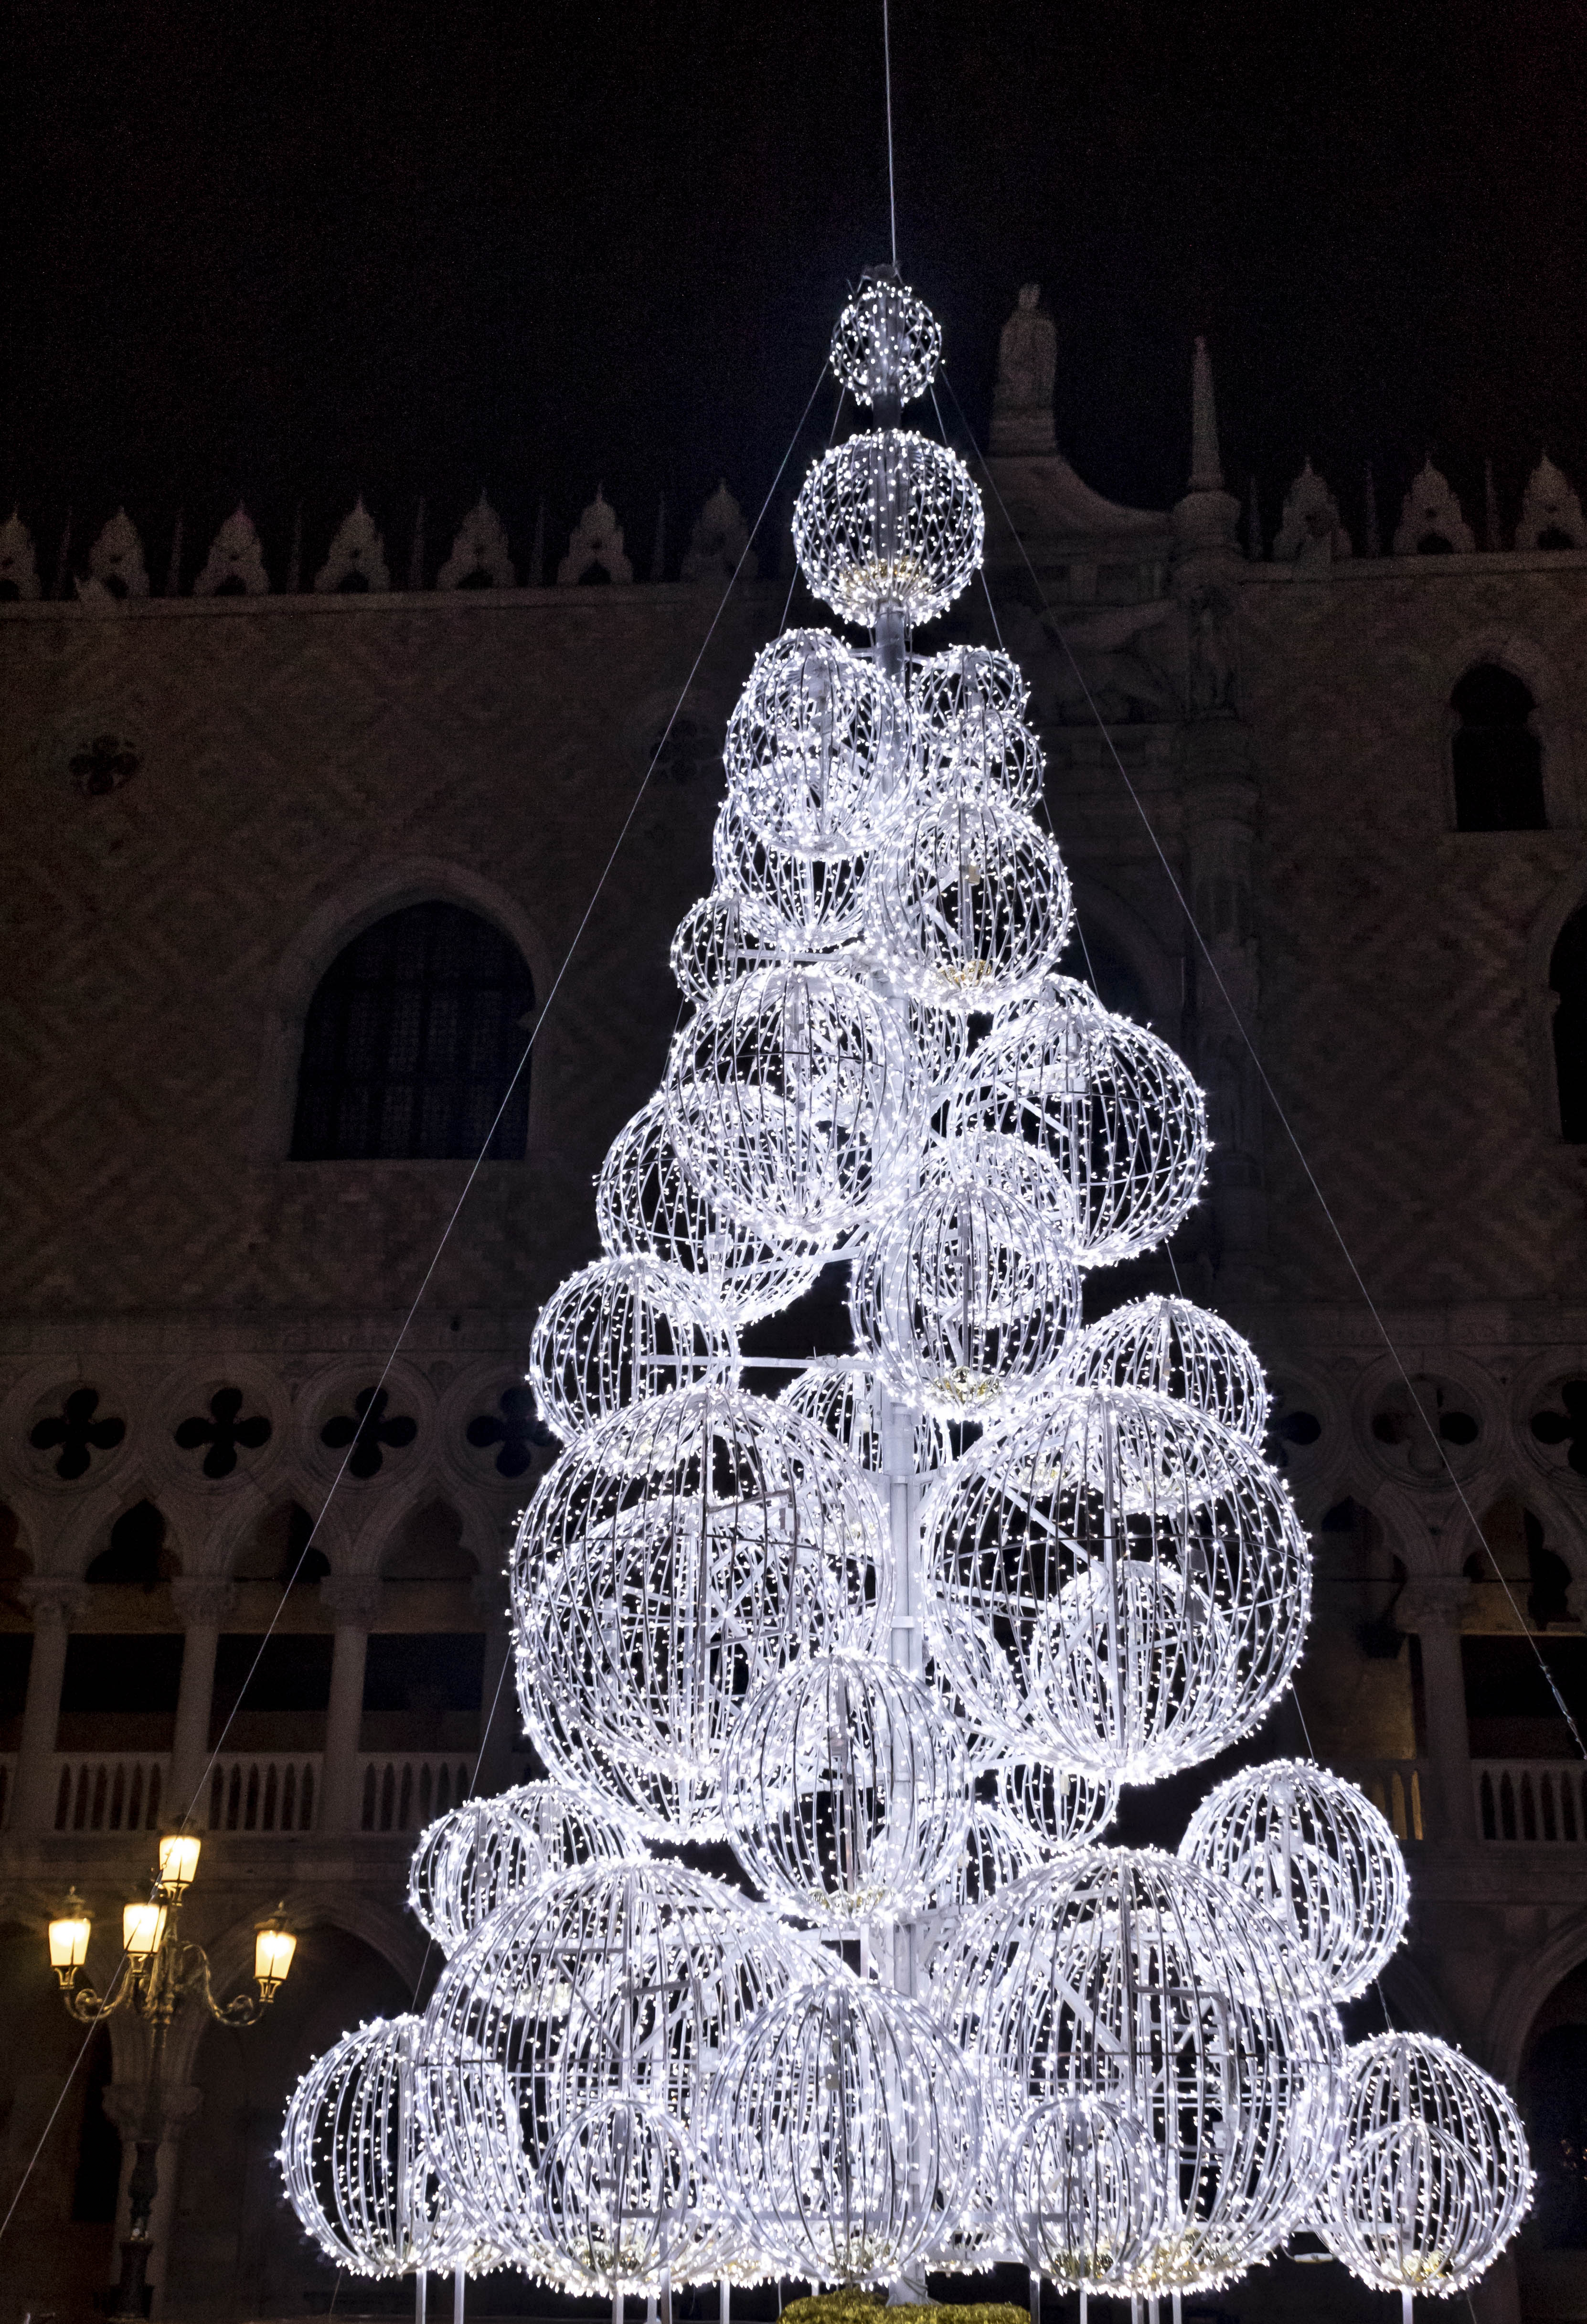 Spending the Christmas Season in Venice, Italy